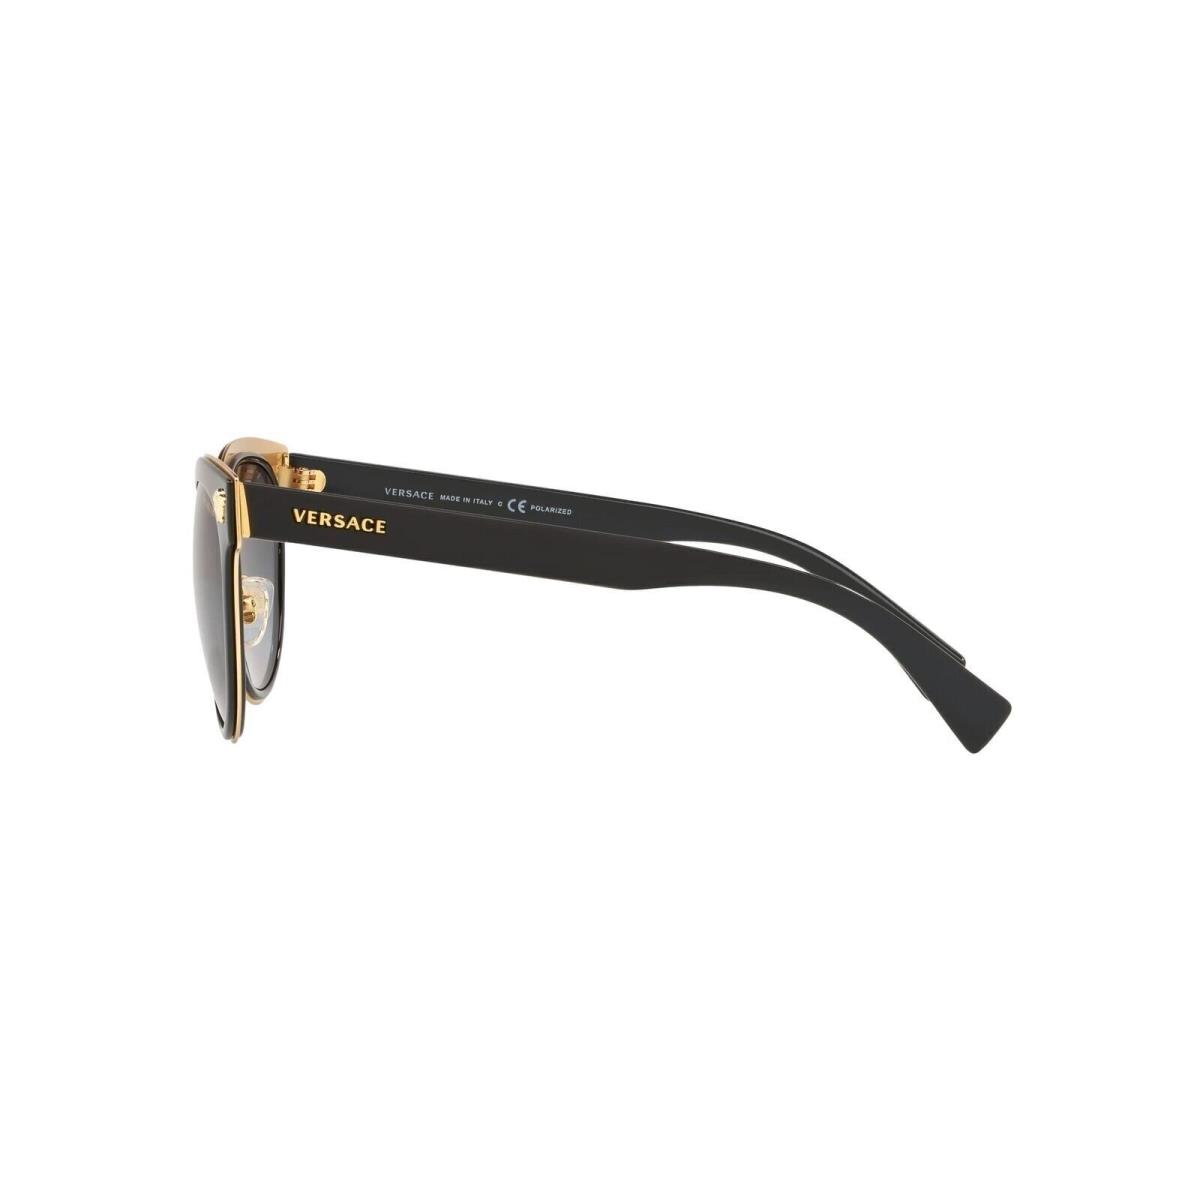 Versace Woman Sunglasses Black Lenses Metal Frame 54mm